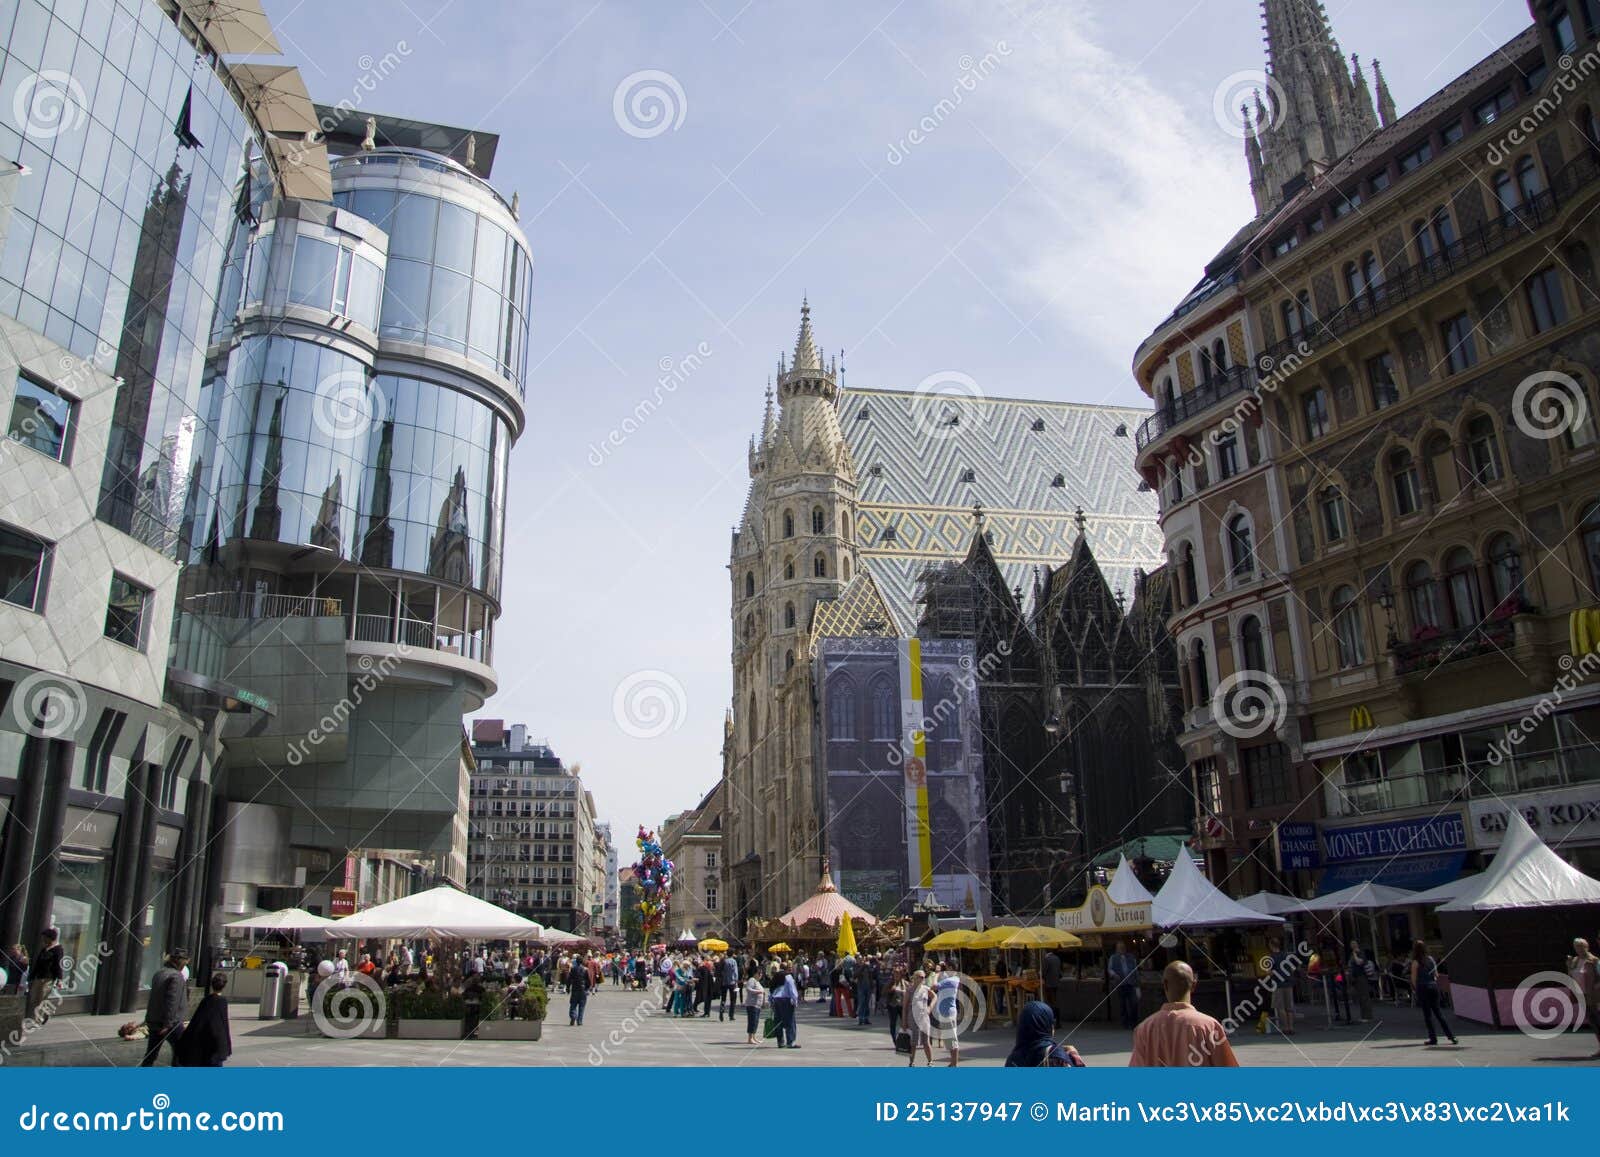 Stephansplatz Vienna Editorial Photography - Image: 25137947